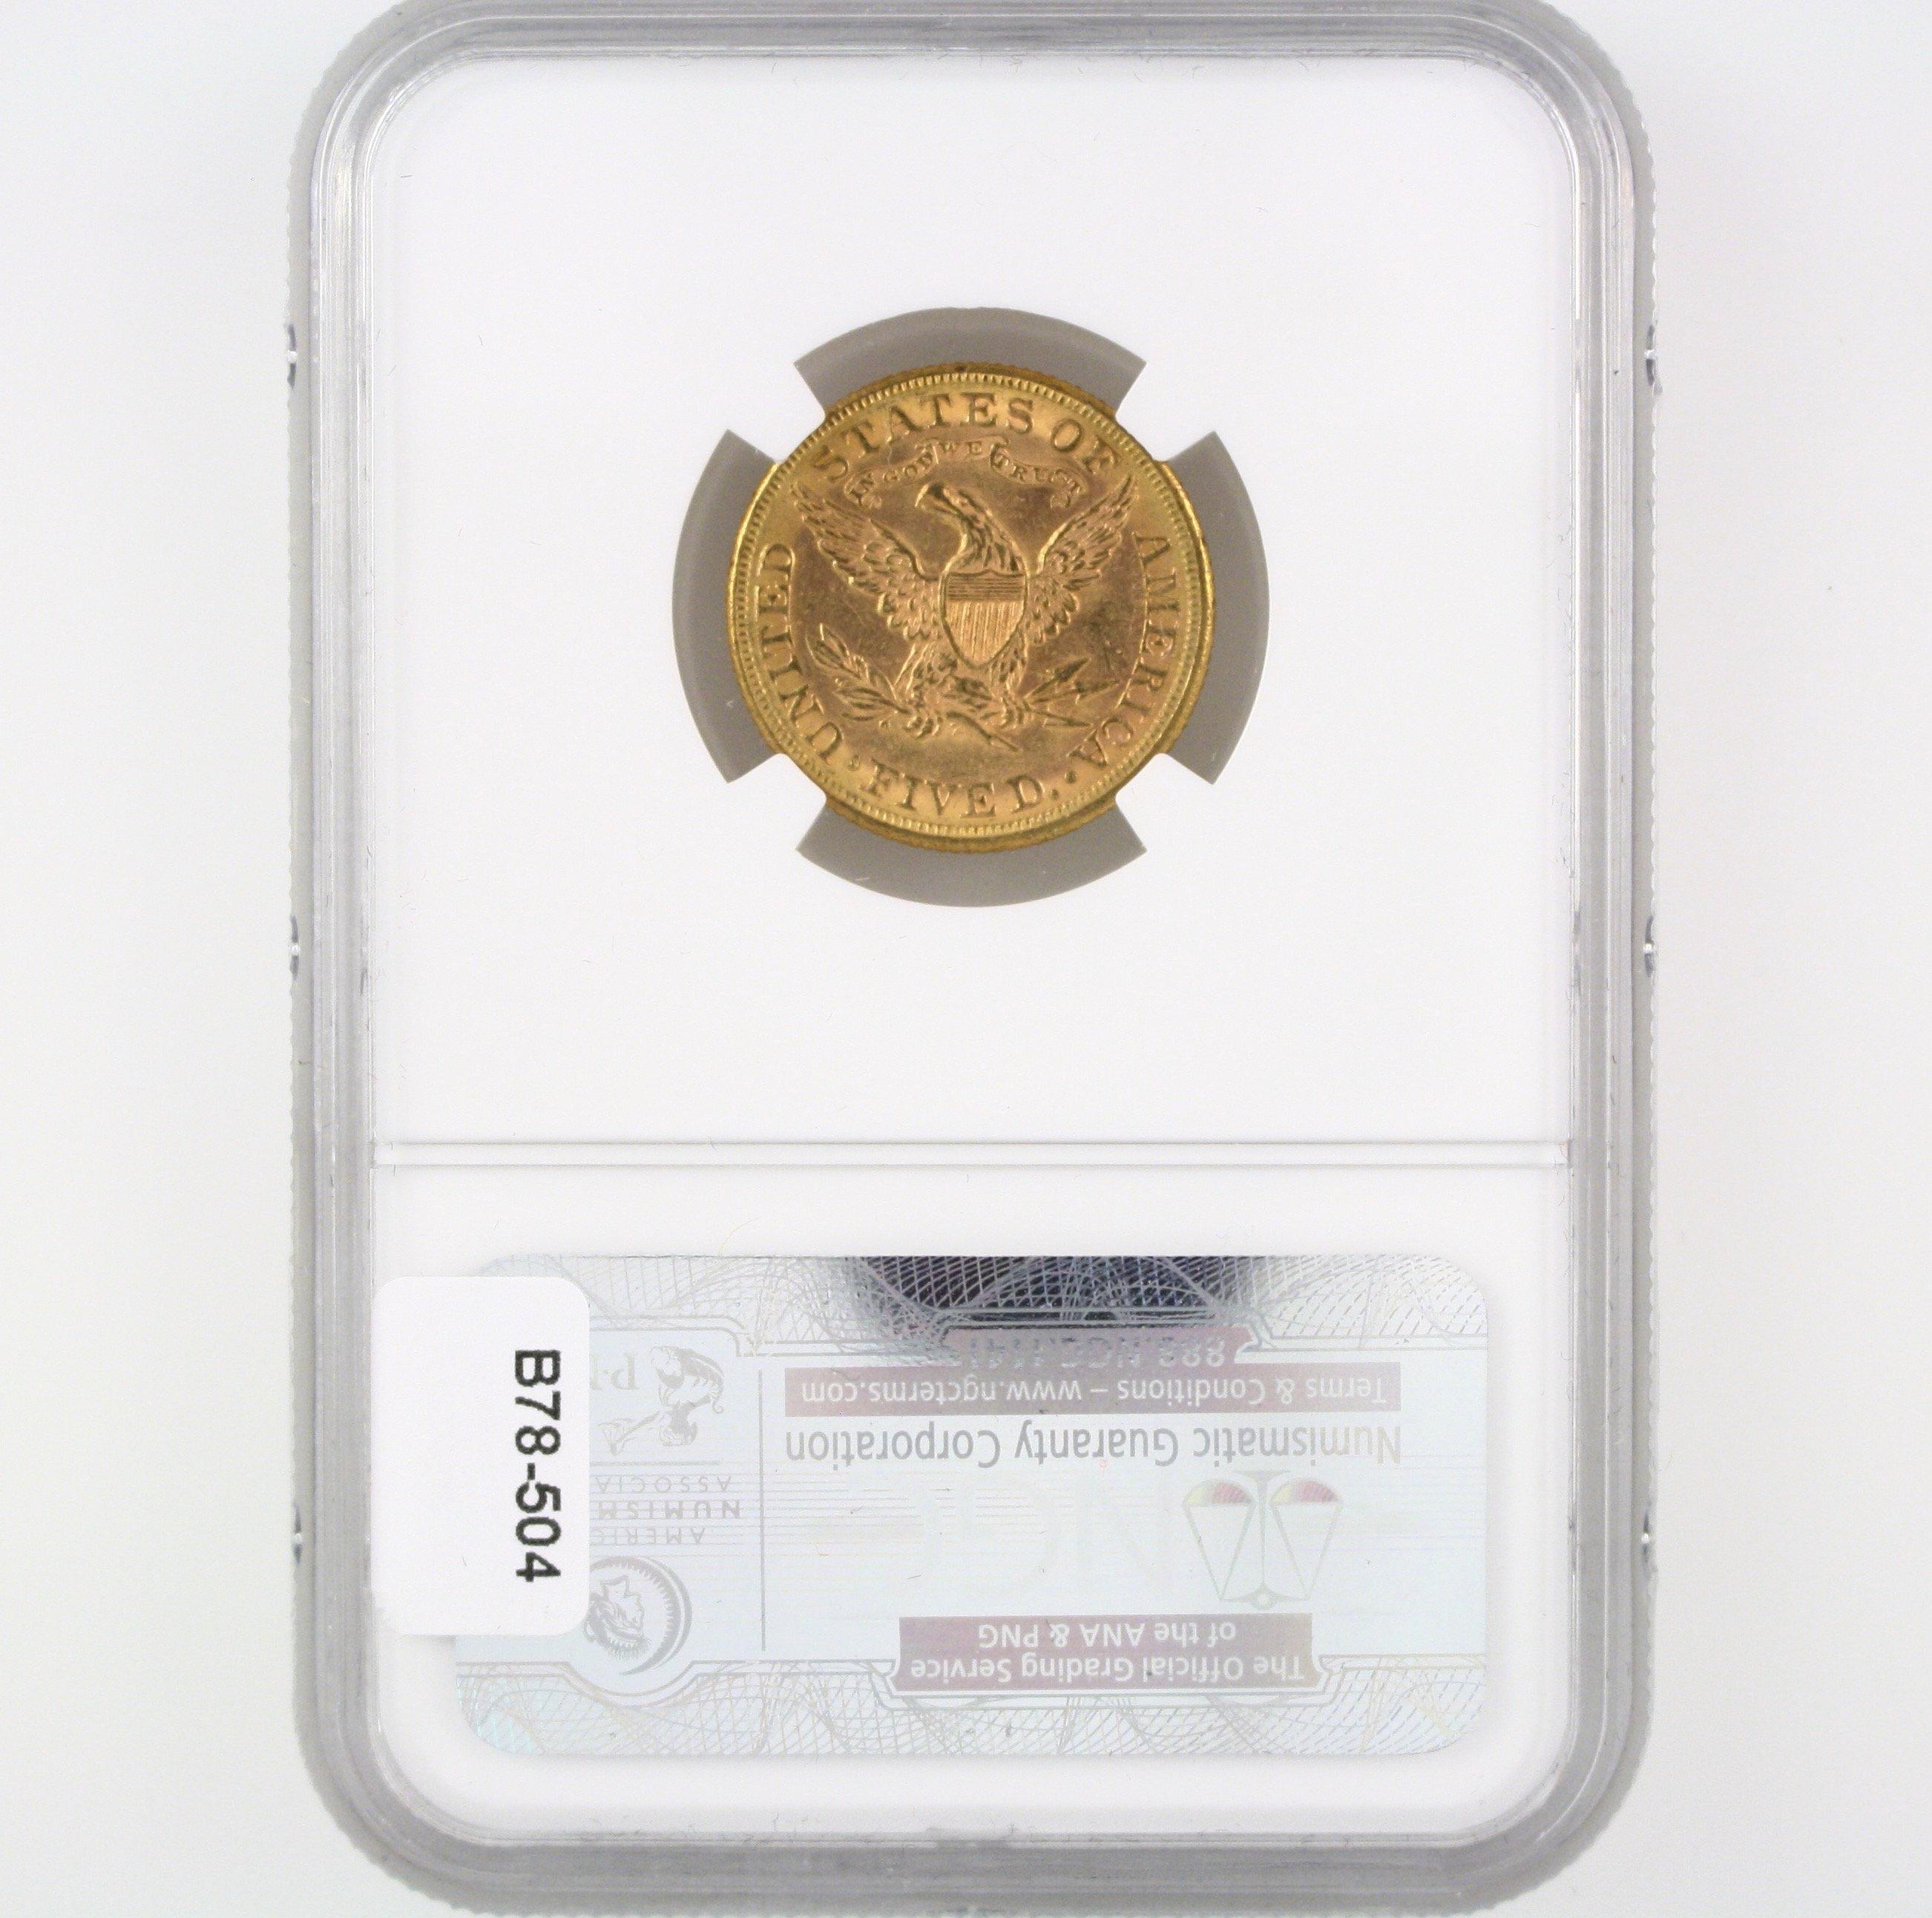 Certified 1881 U.S. $5 Liberty head gold coin